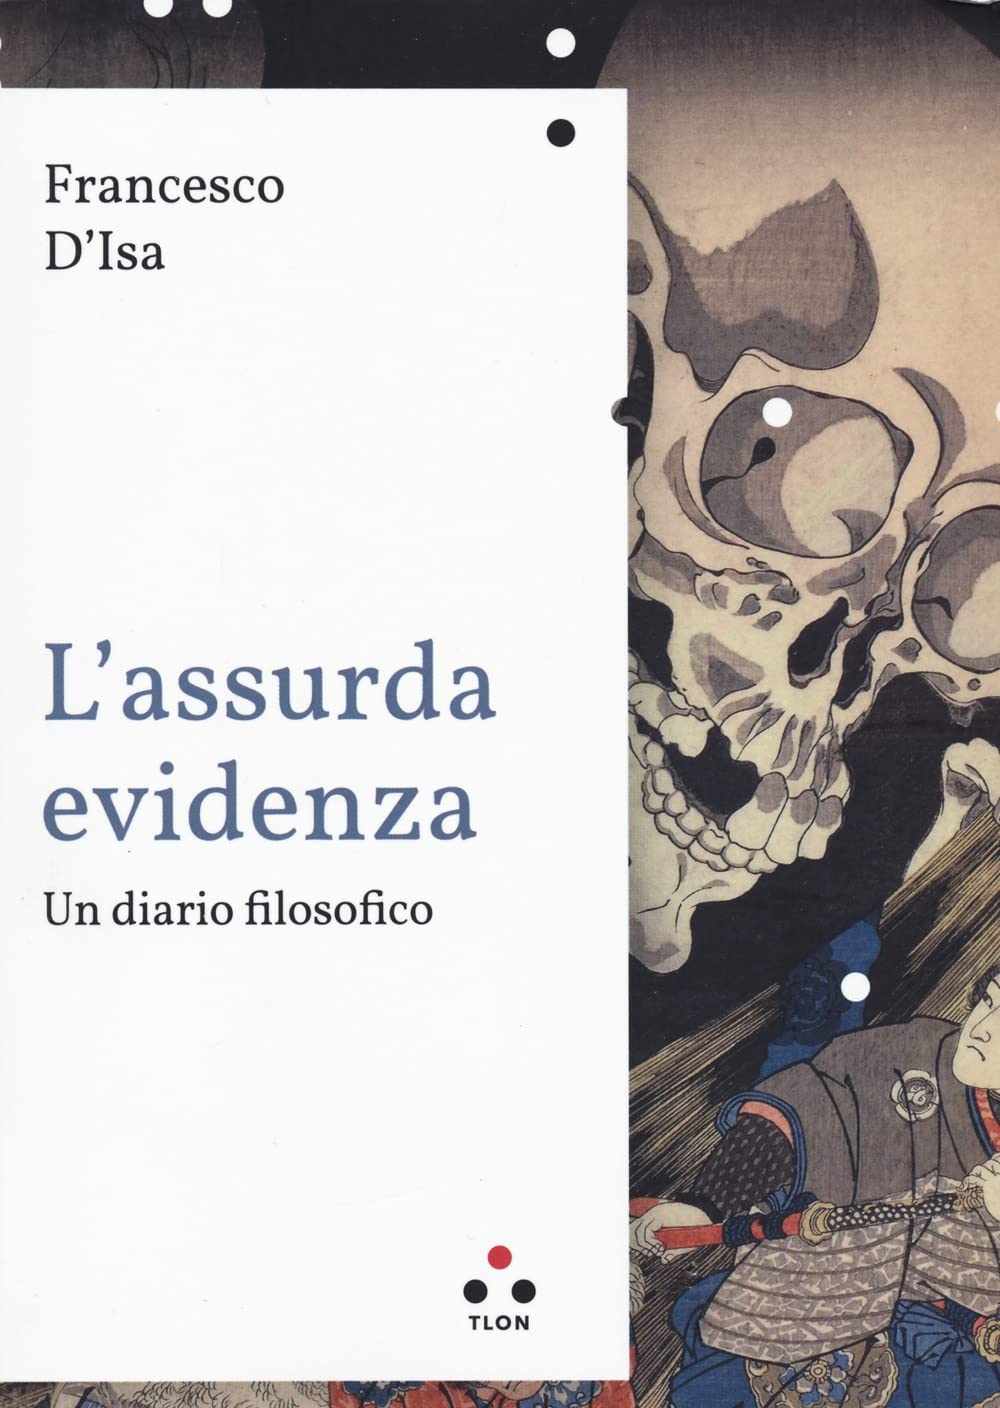 Francesco D'Isa – L'assurda evidenza (Tlon, Milano 2022)